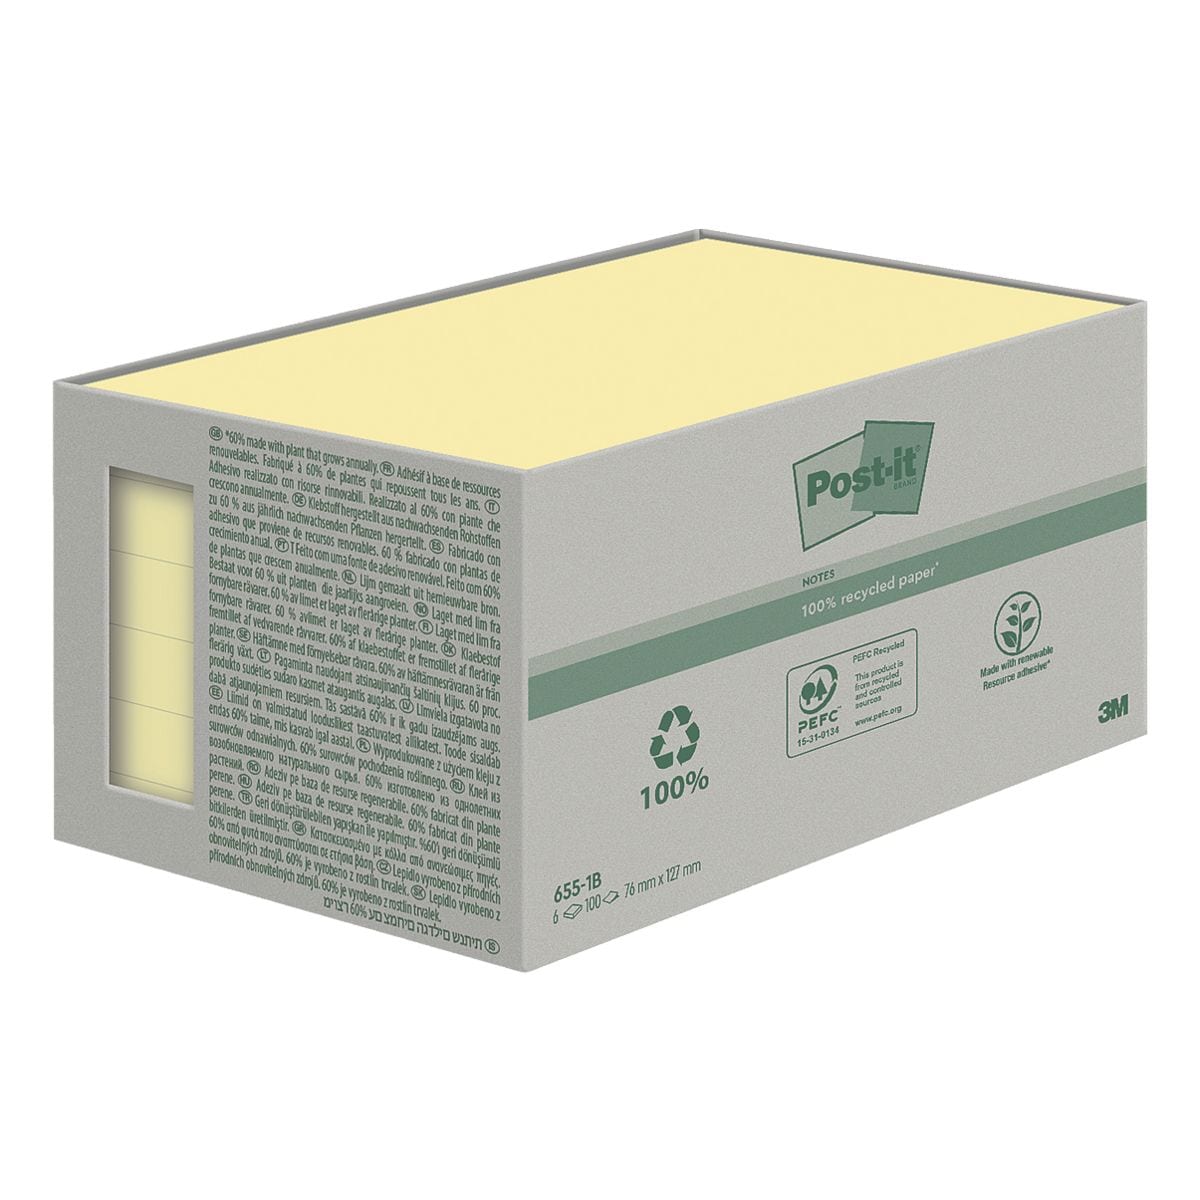 Post-it Notes (Recycle) Haftnotizblock Recycling 7,6 x 12,7 cm, 600 Blatt gesamt, gelb